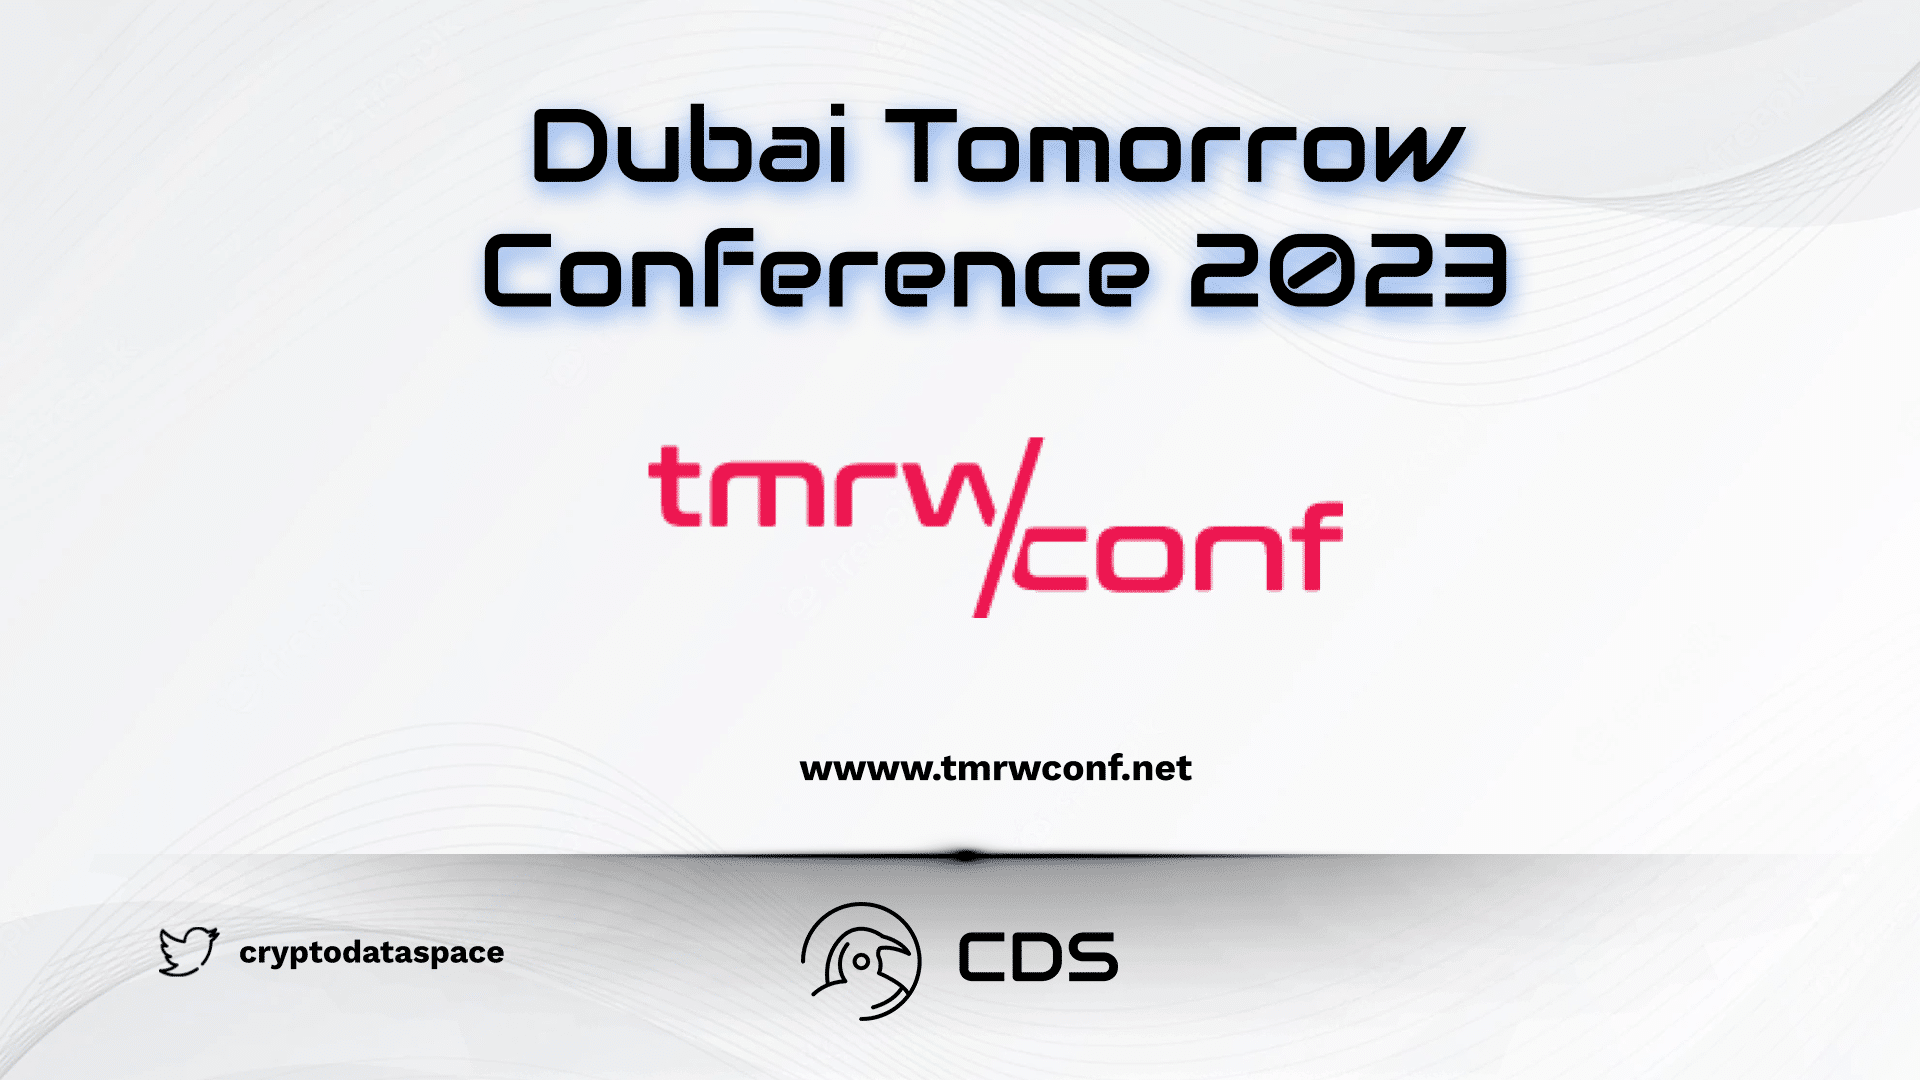 Dubai Tomorrow Conference 2023